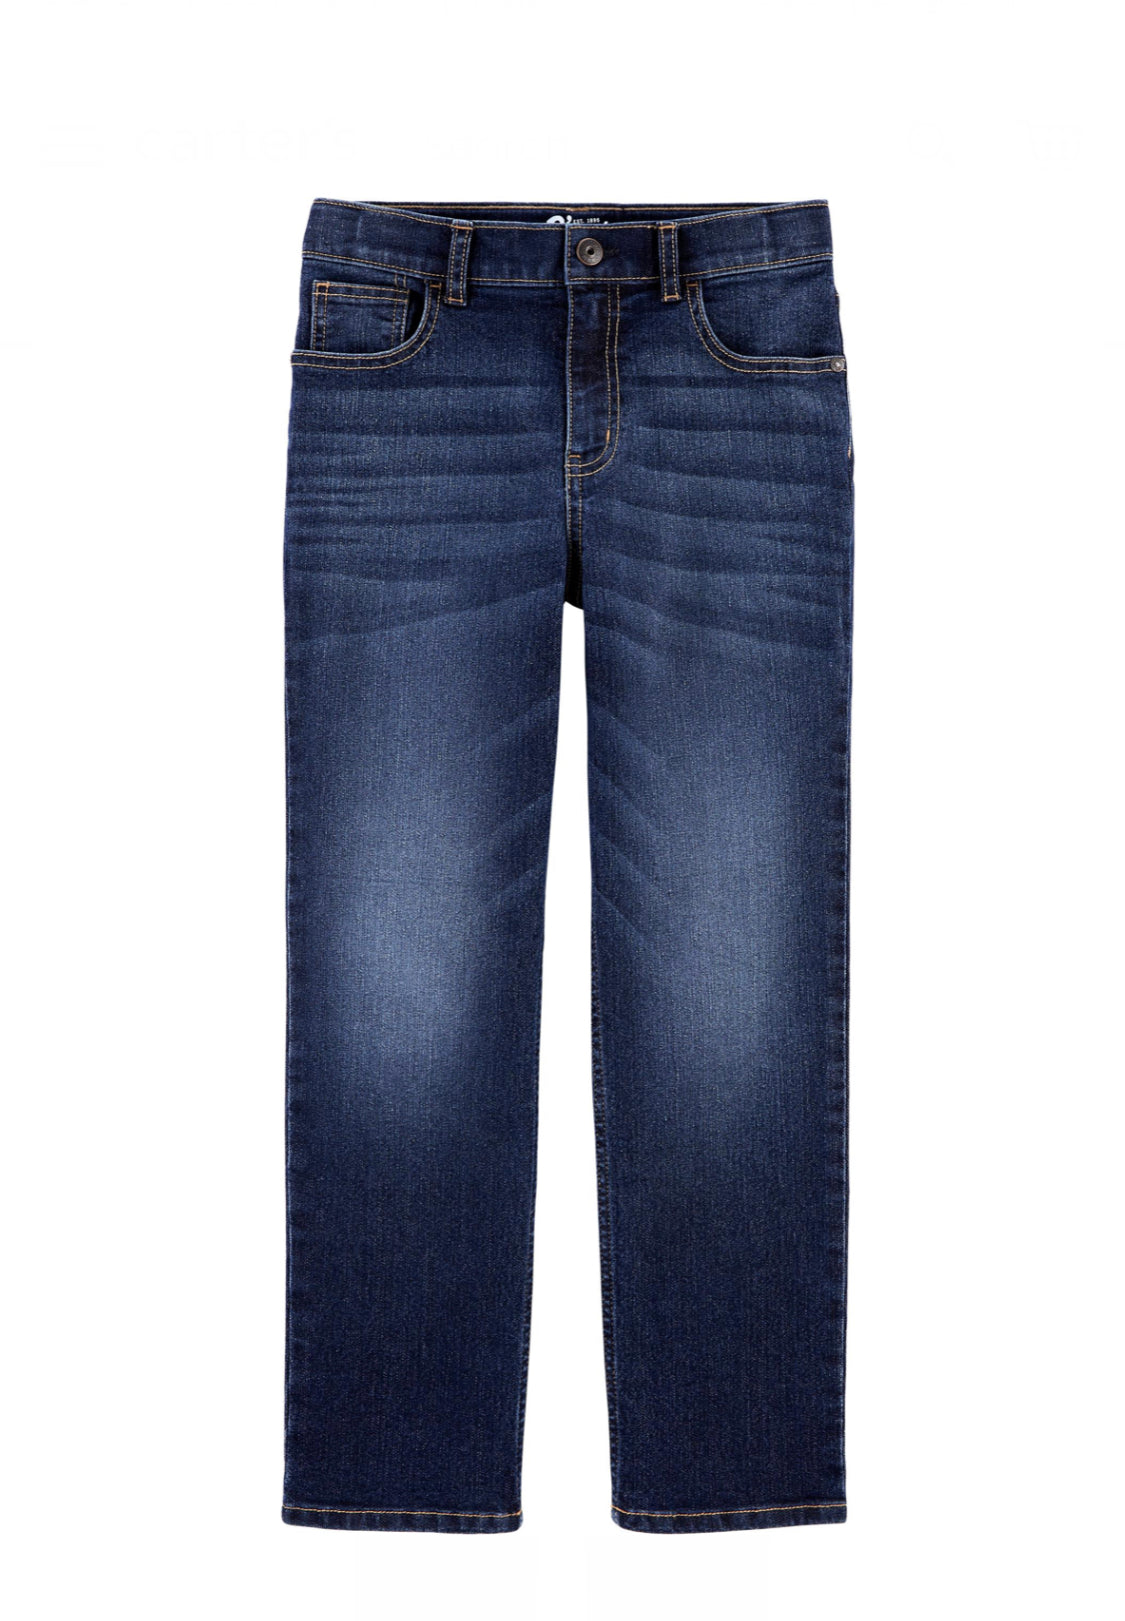 Oshkosh Classic Jeans - True Blue